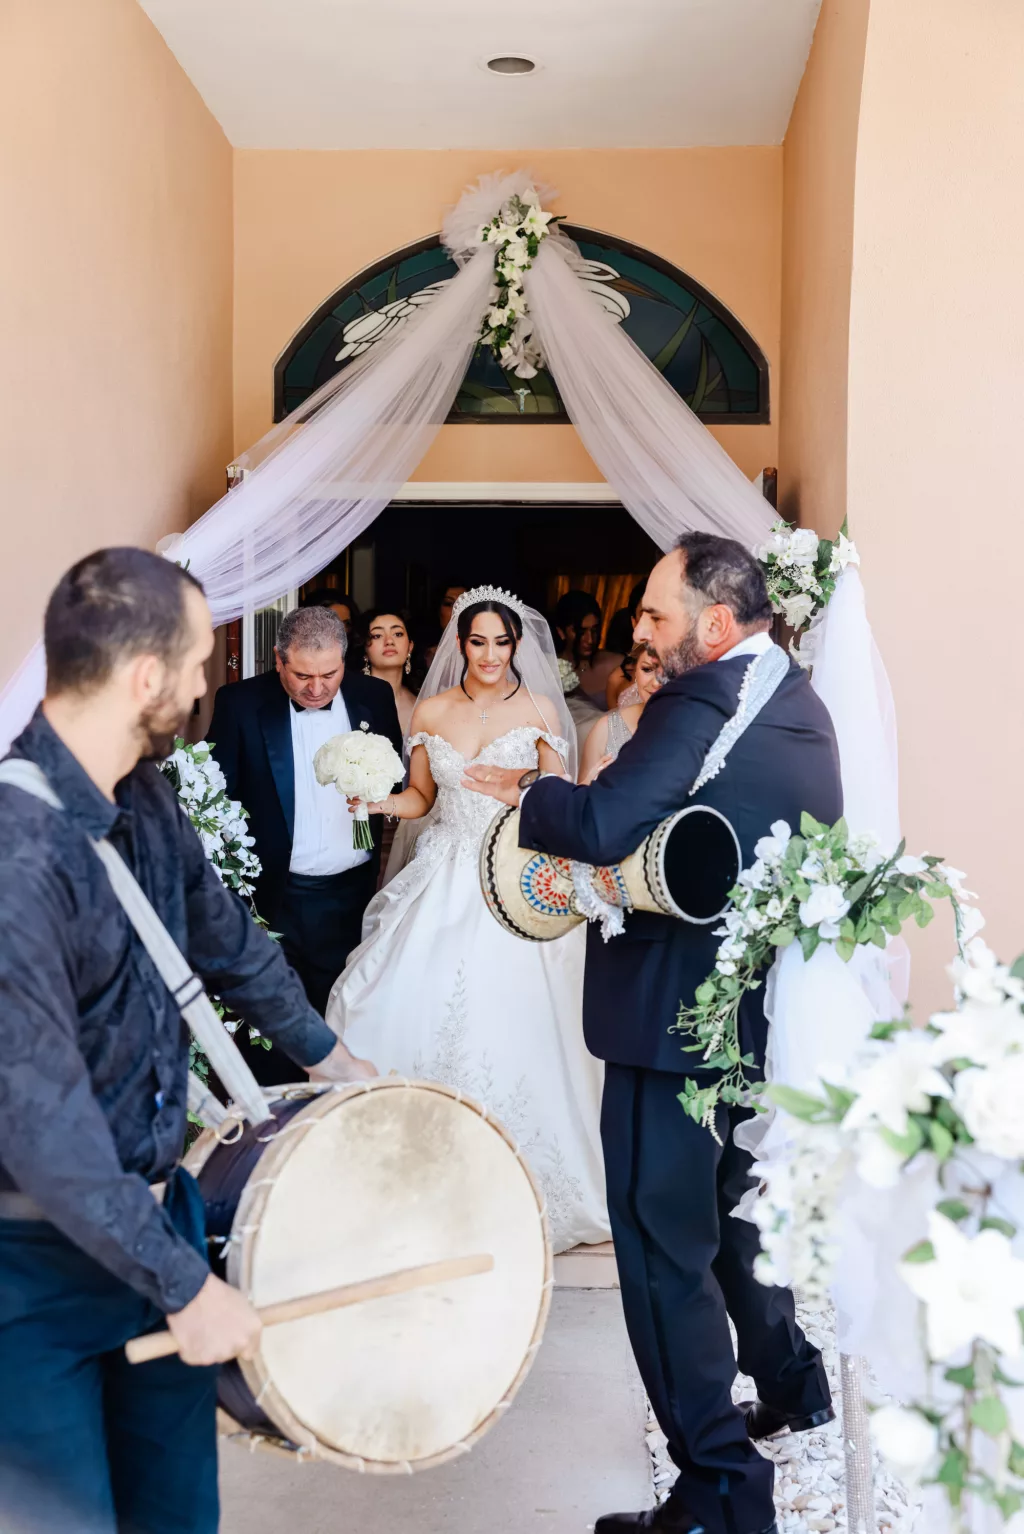 Drum Processional to Wedding Ceremony Inspiration